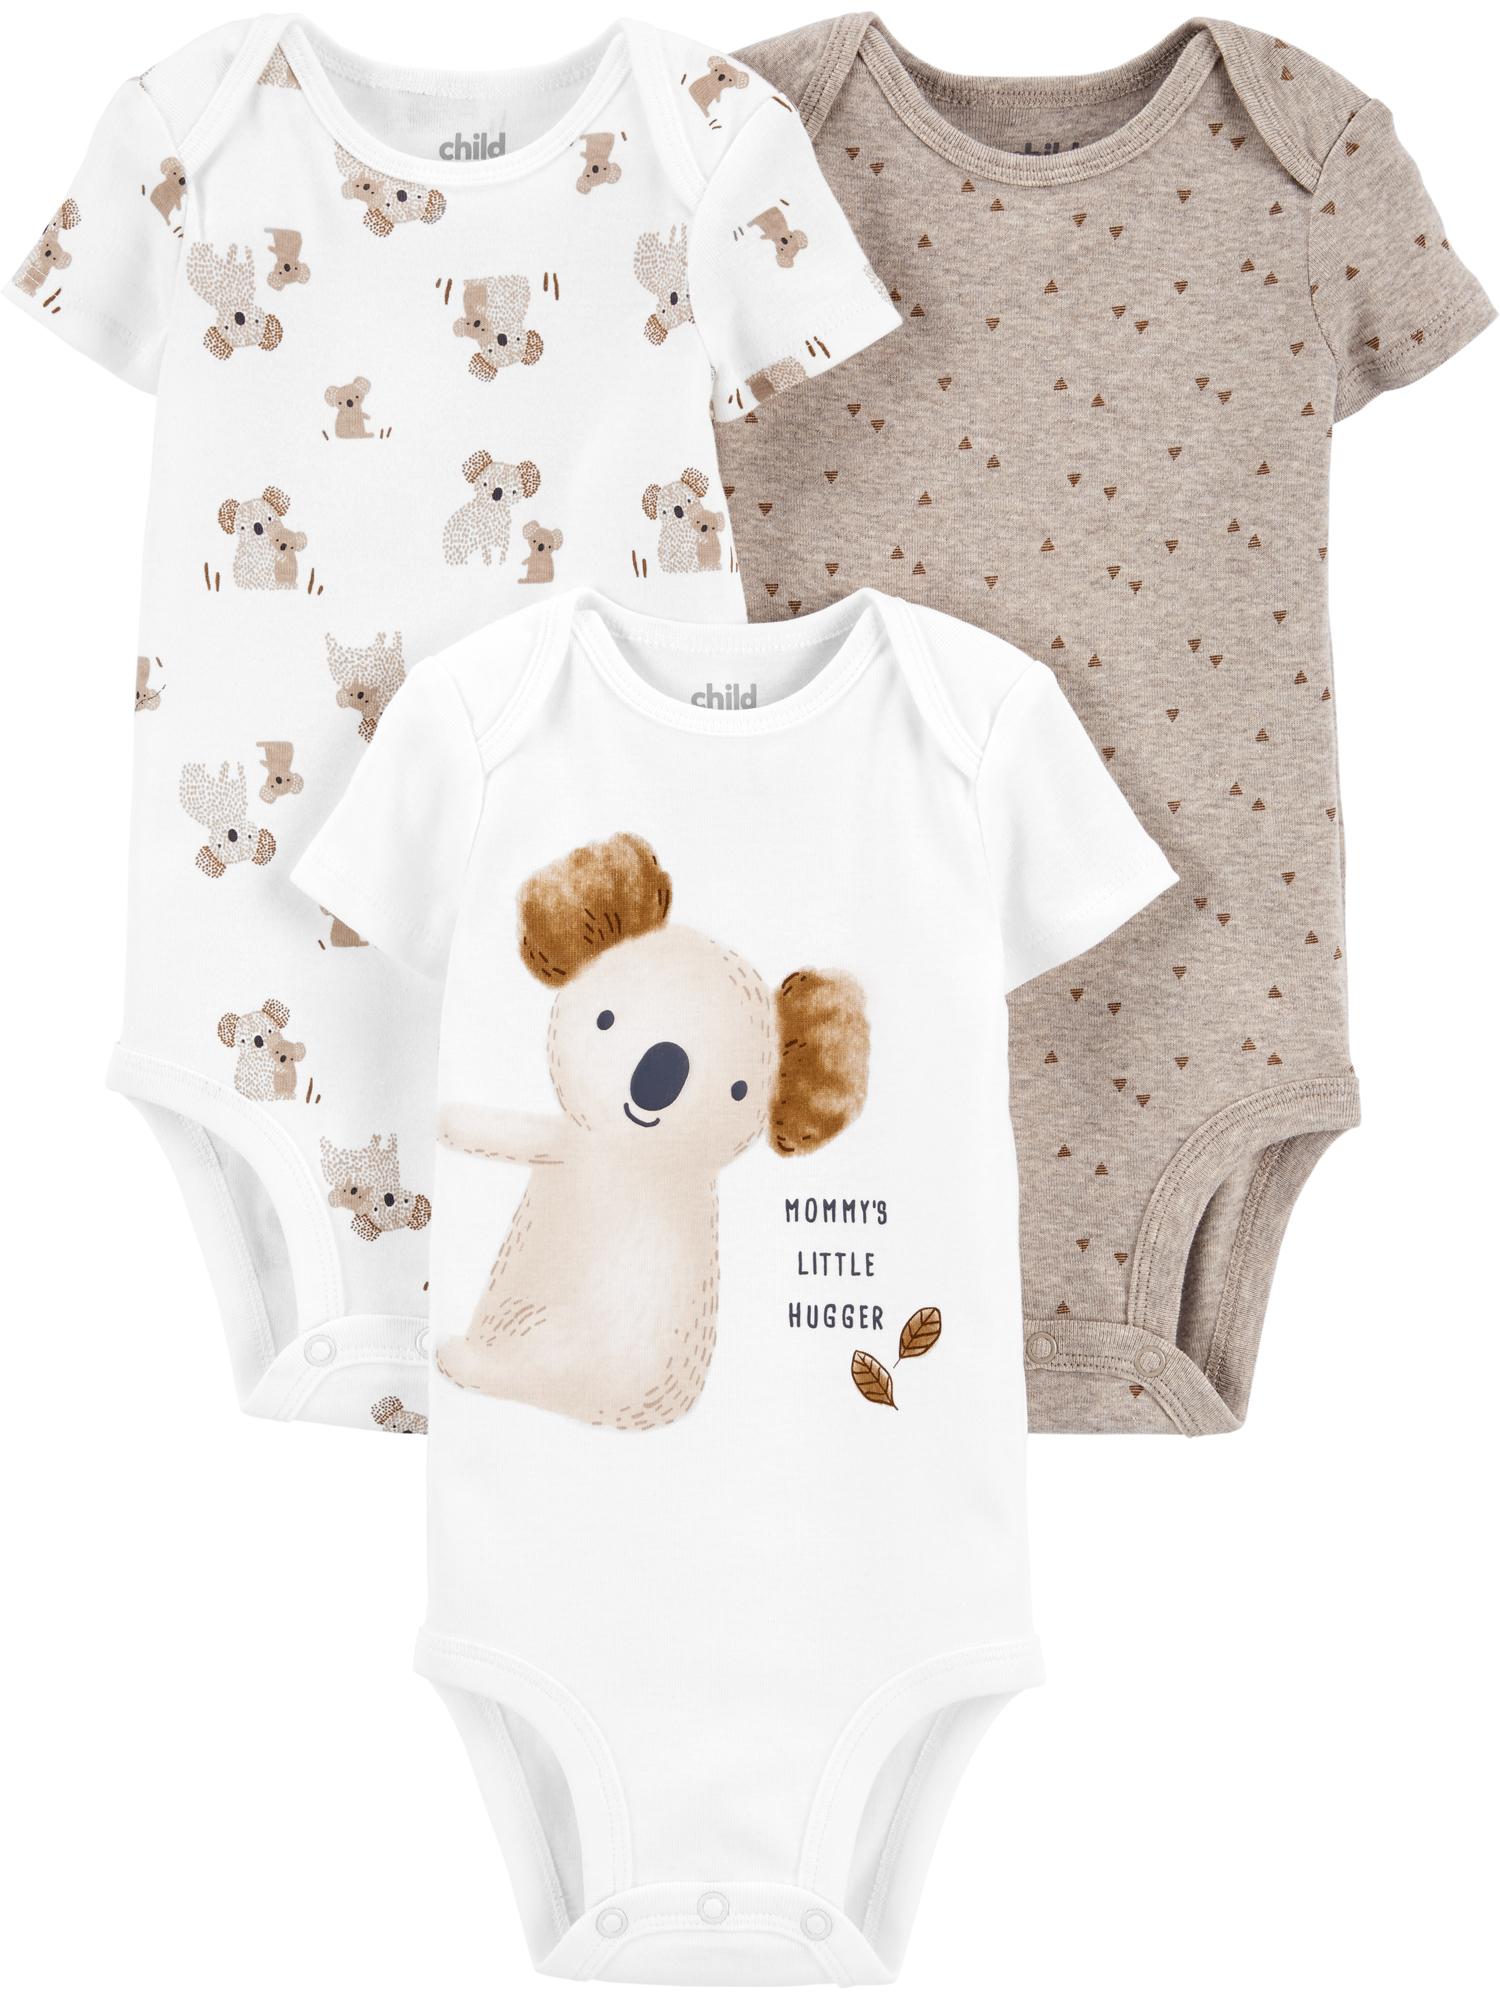 Carter's Child of Mine Baby Boy Baby Shower Layette Gift Set, 8-Piece, Preemie-24 Months - image 2 of 7